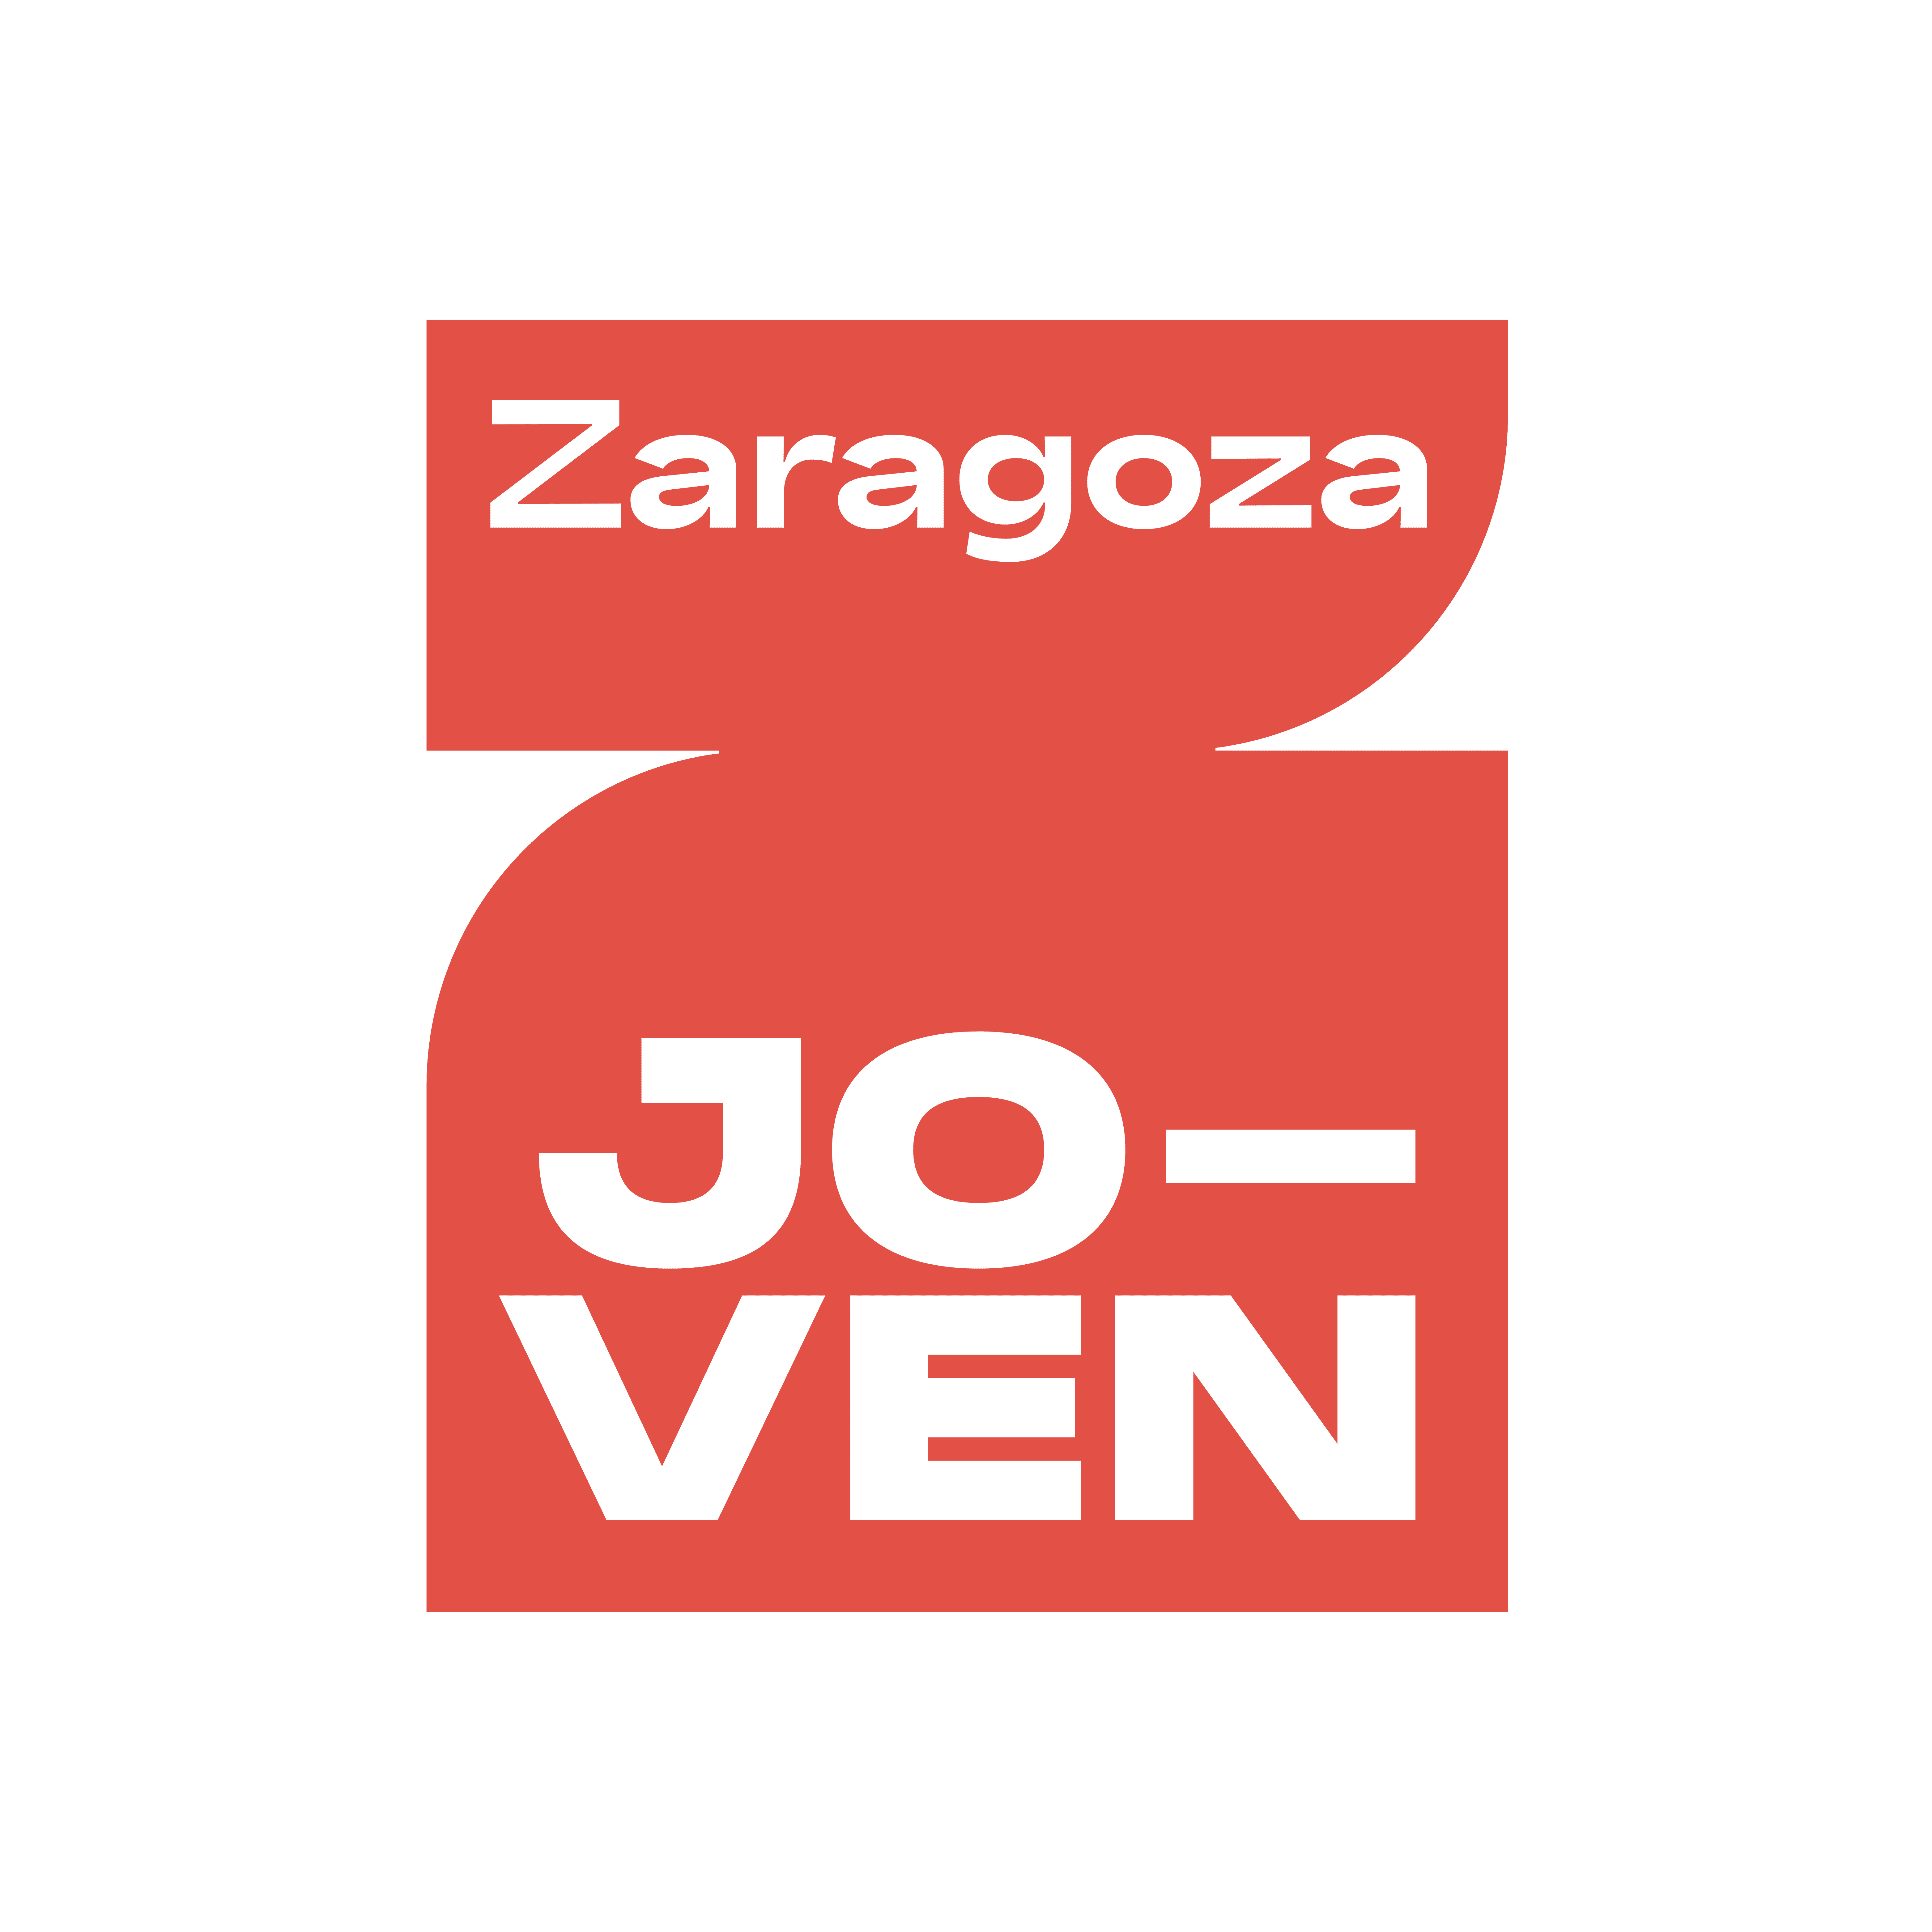 Juventud Zaragoza. Ayuntamiento de Zaragoza